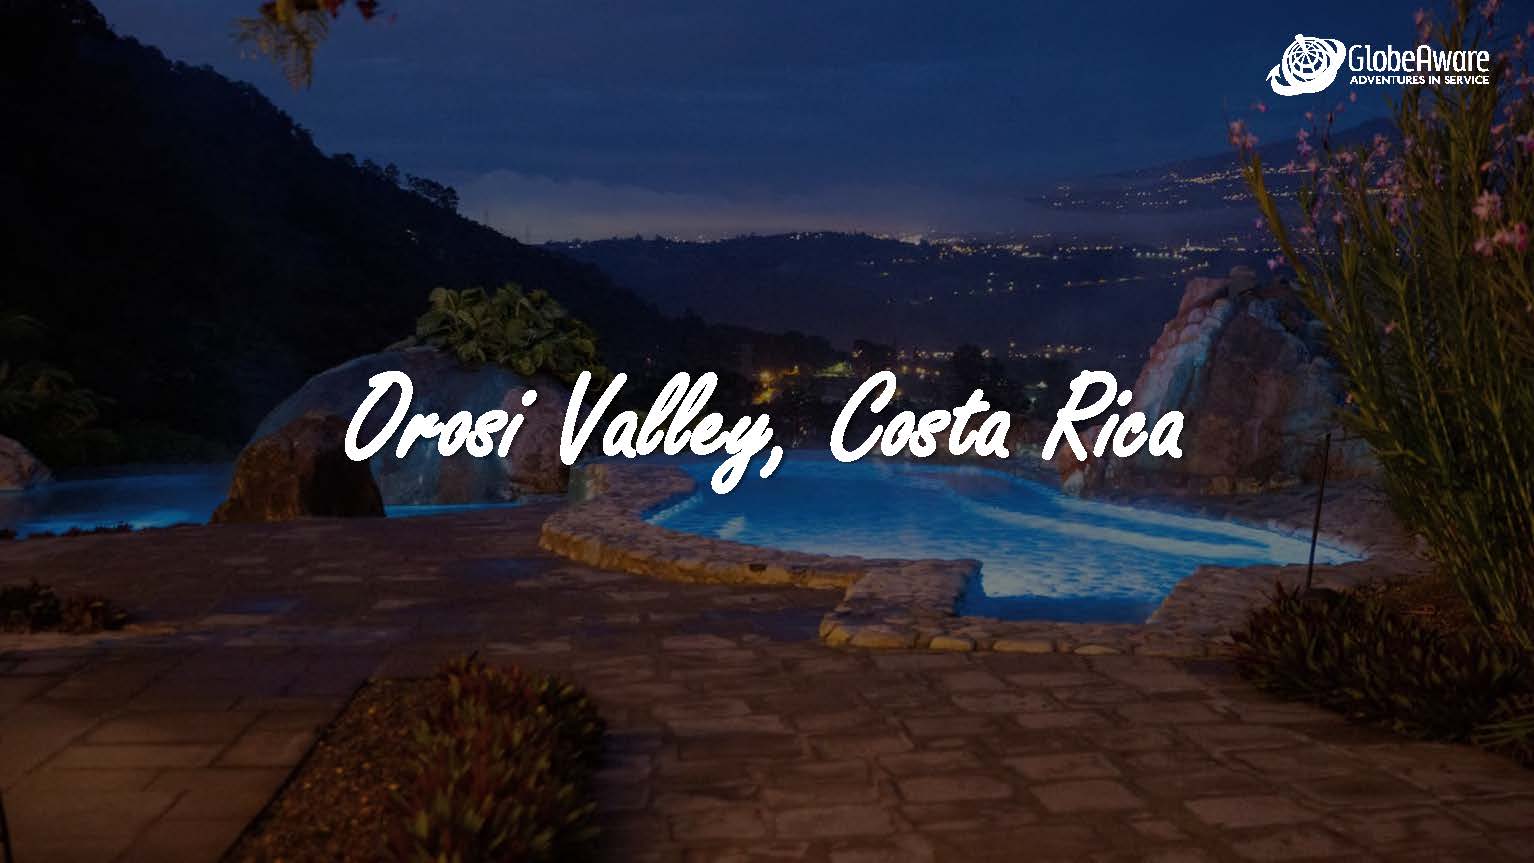 Costa Rica Orosi Valley